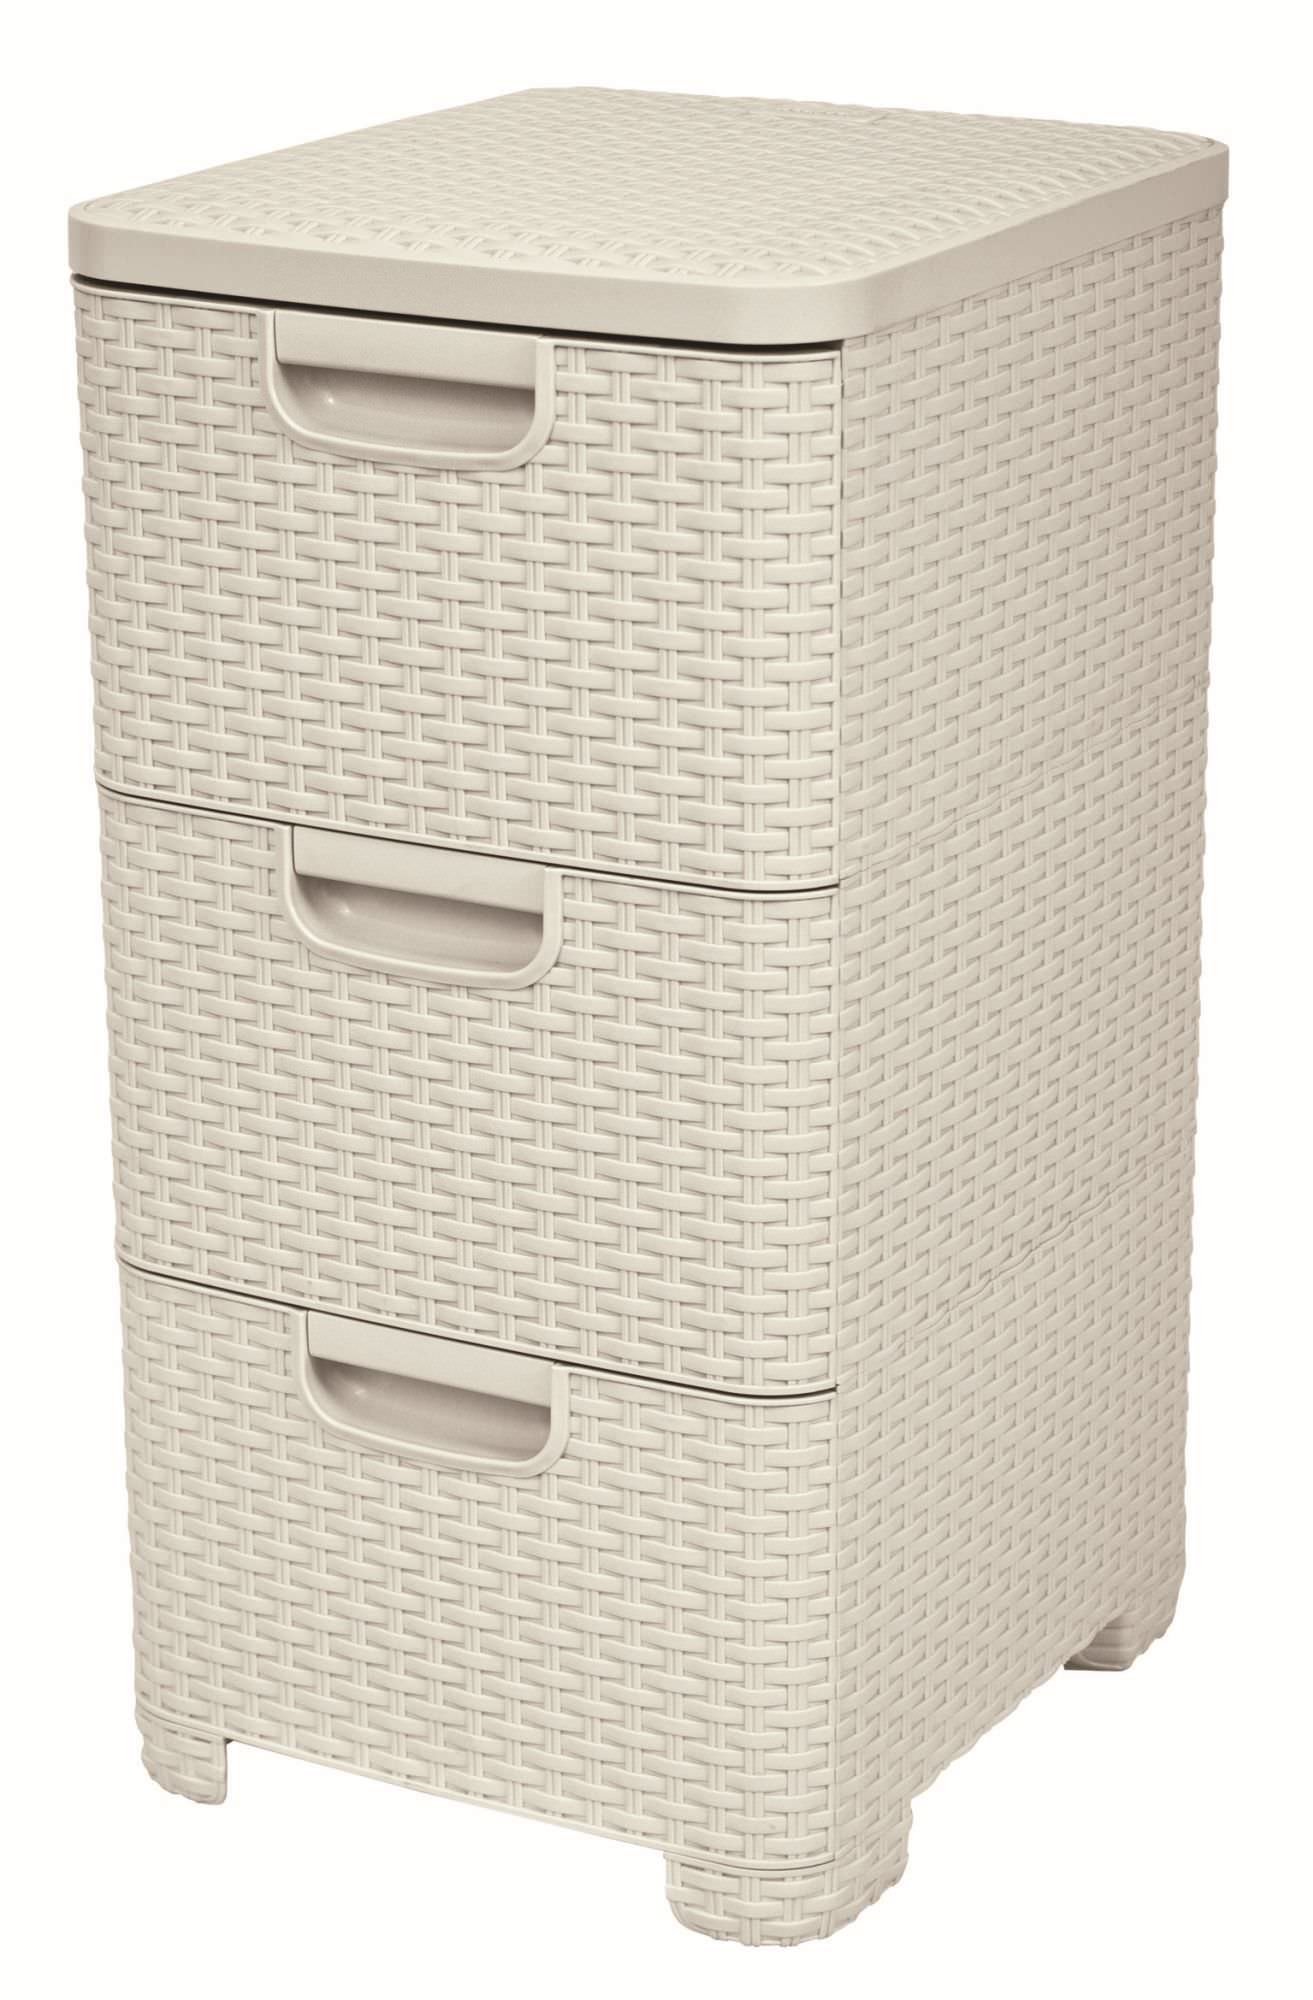 Komoda CURVER RATTAN STYLE, 3 stalčių, baltos spalvos, h59,5 x 32,5 x 37,5 cm